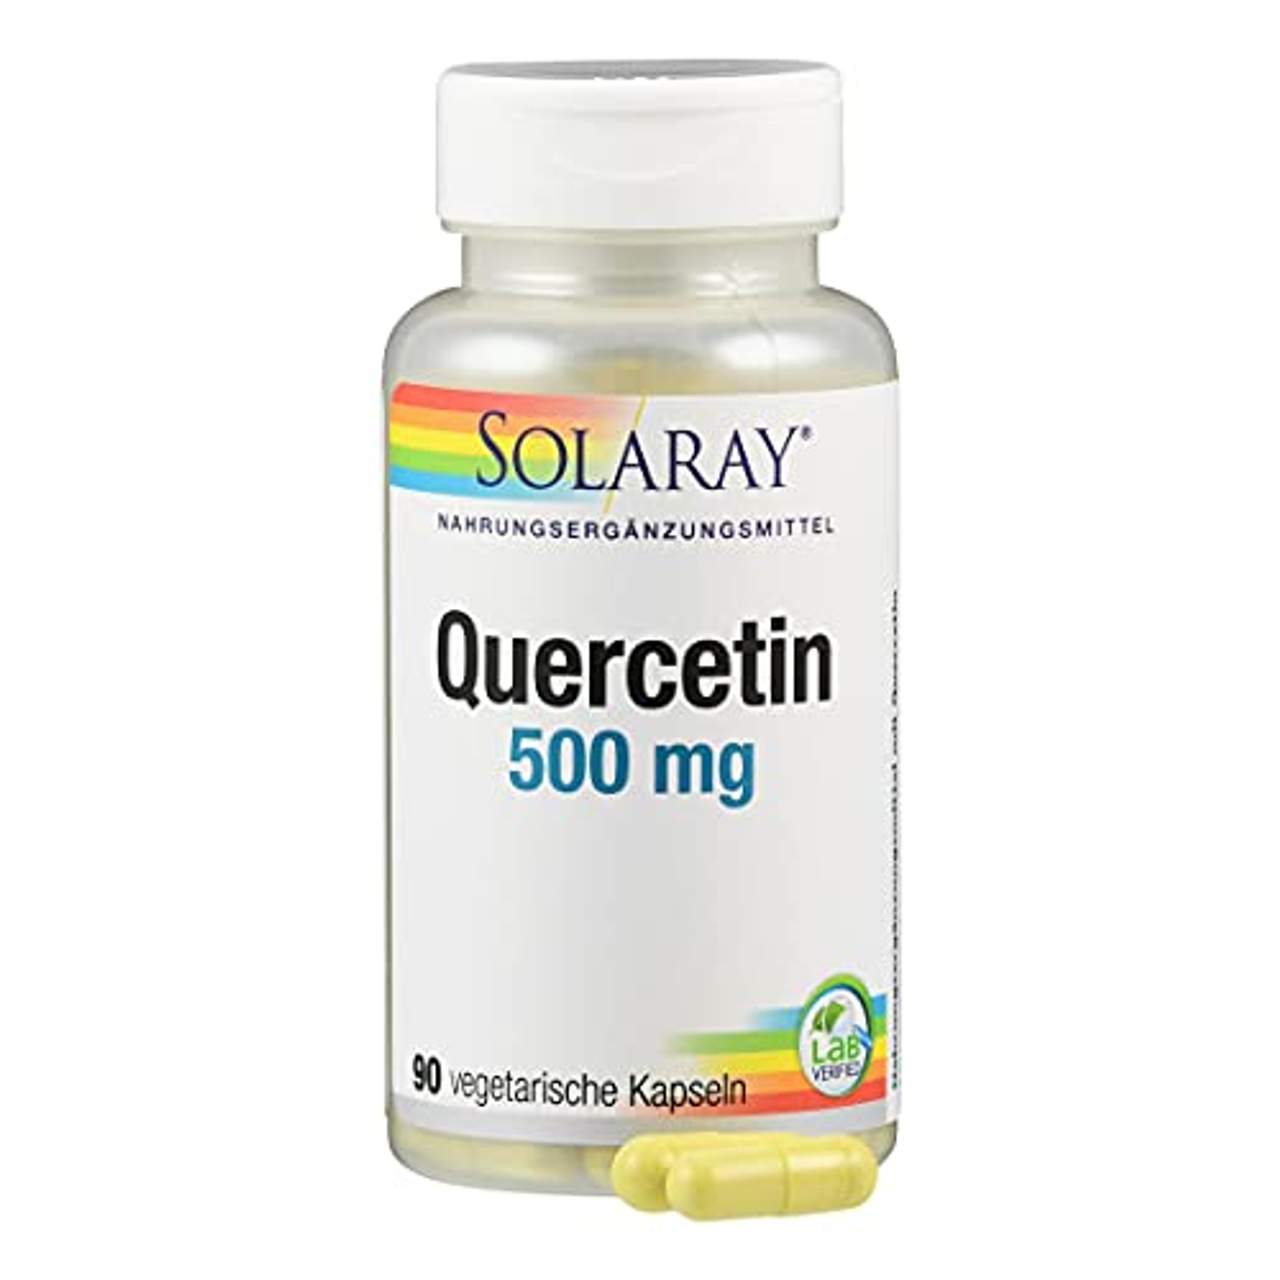 SOLARAY Quercetin 500 mg 100 g